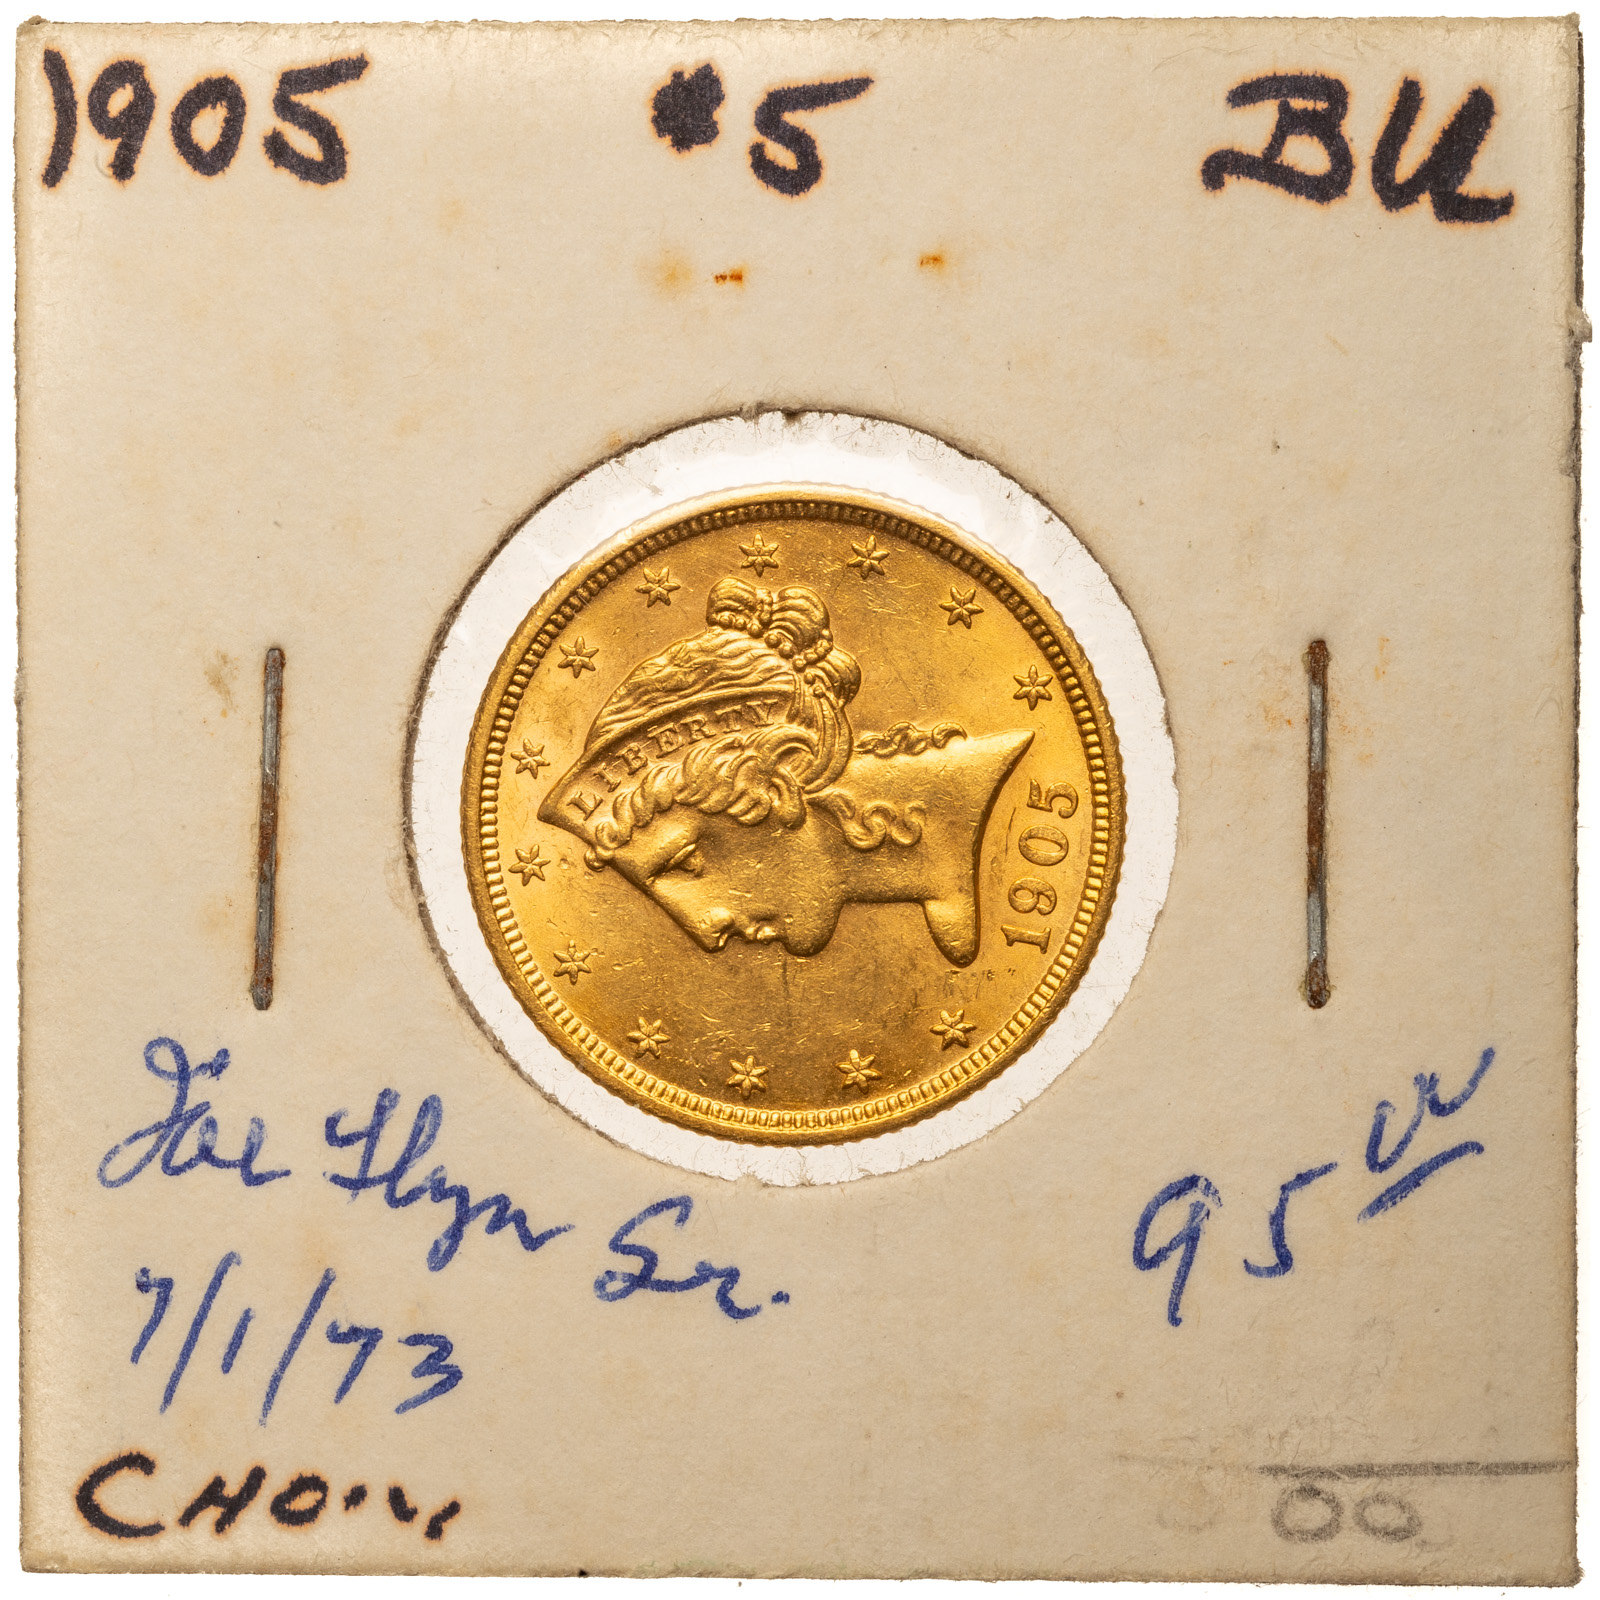 1905 $5 LIBERTY GOLD HALF EAGLE